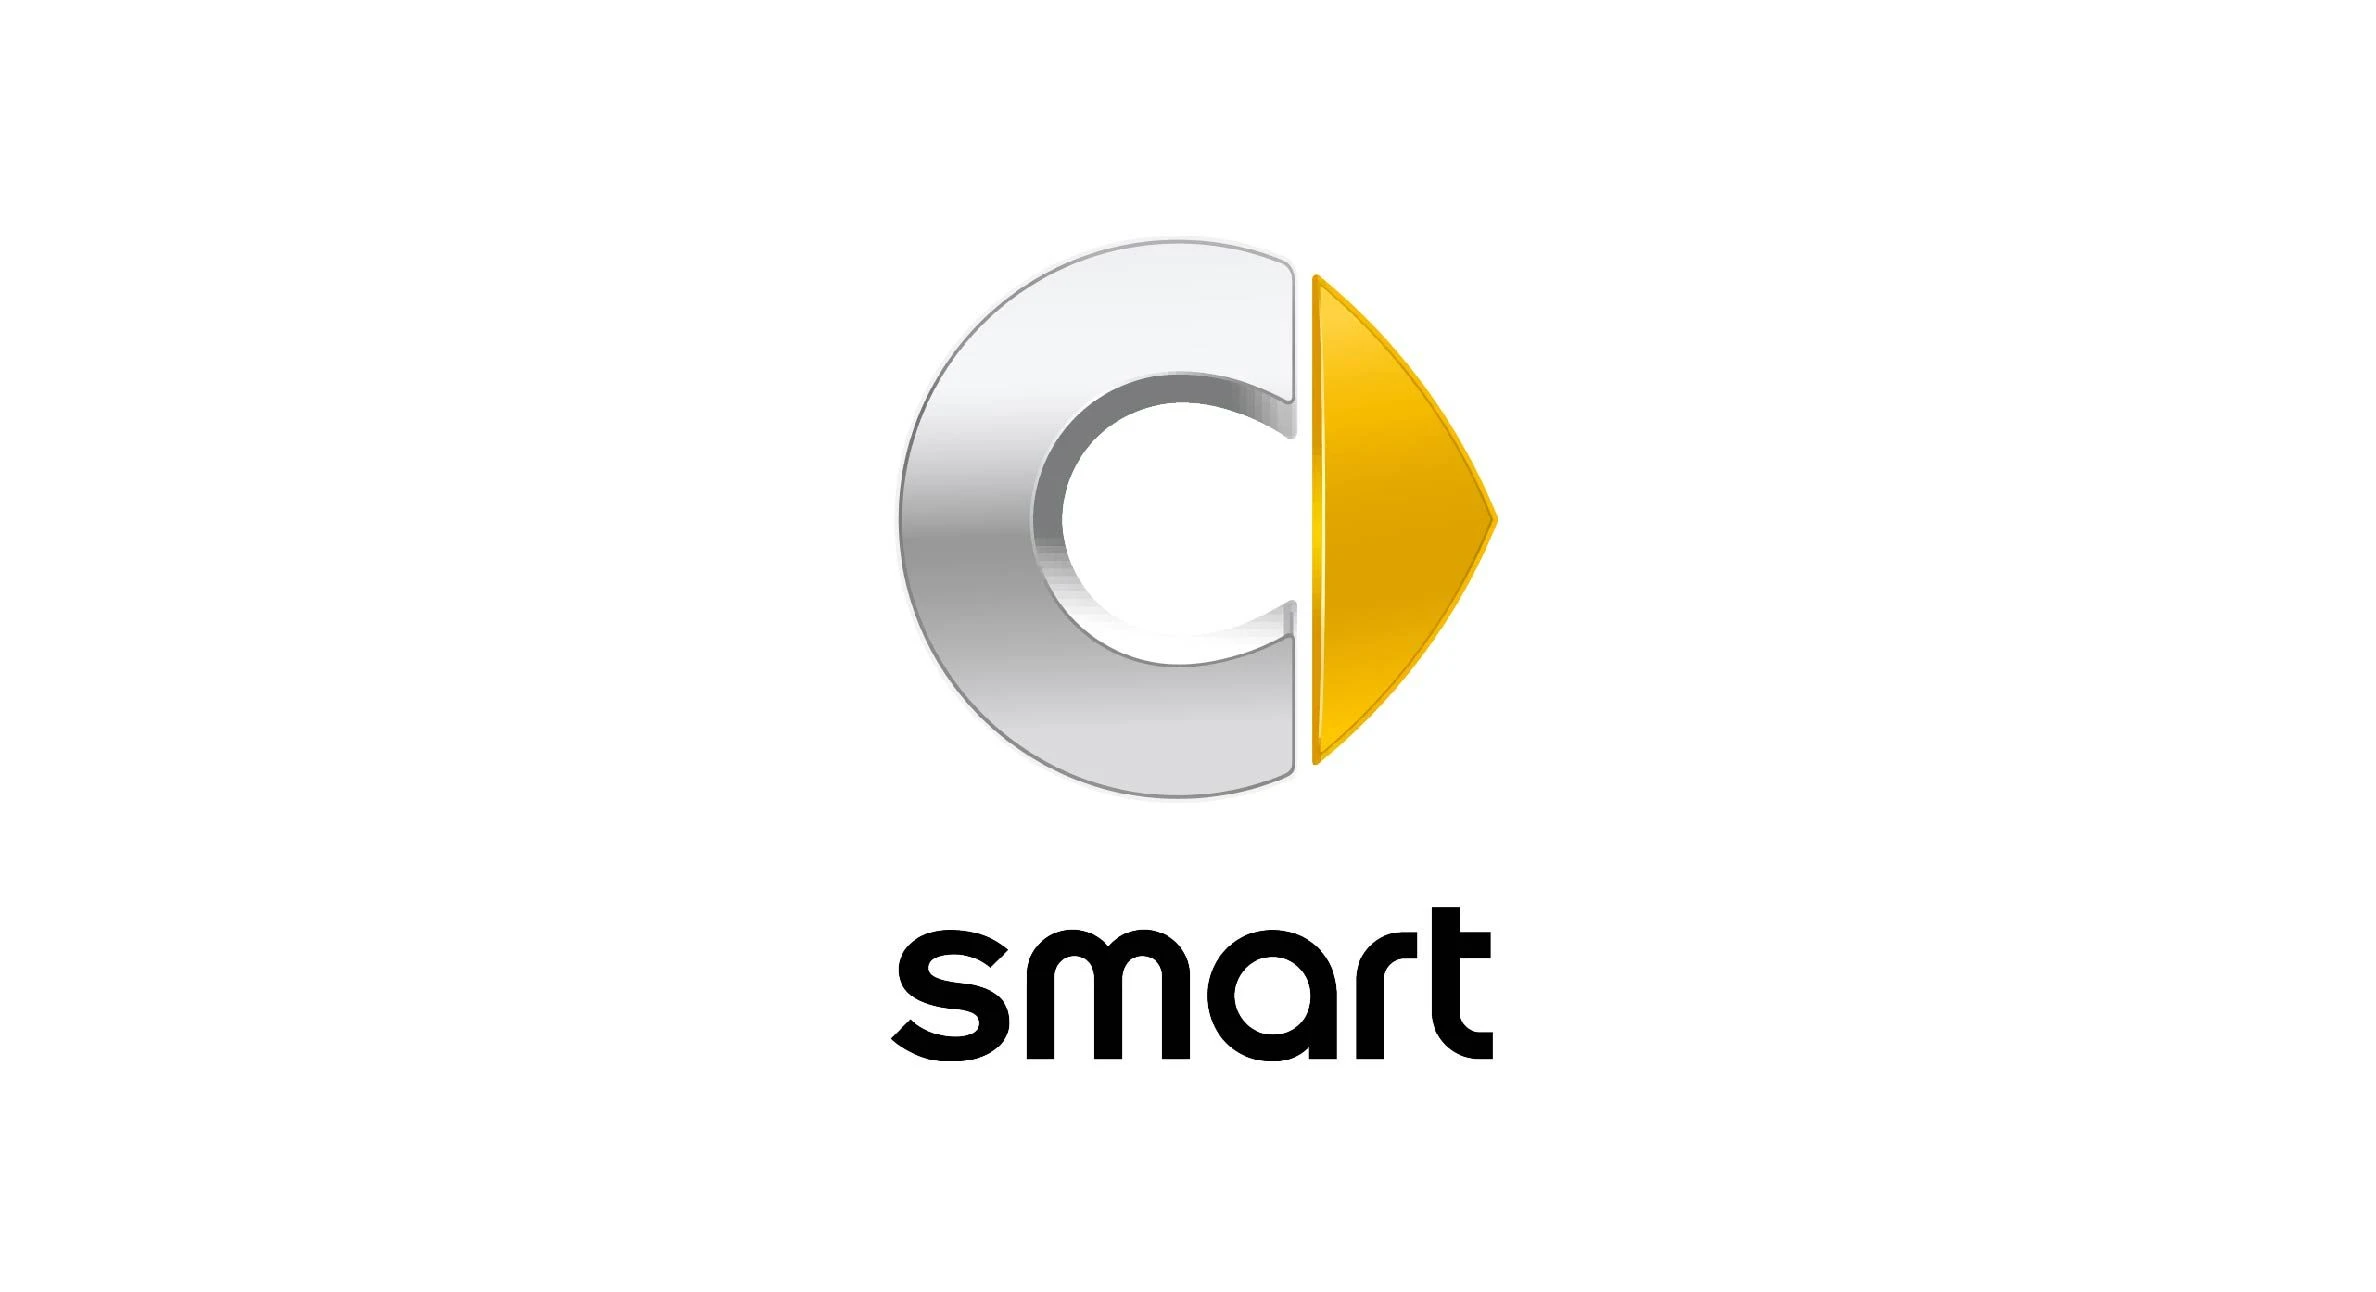 Smart car brand logo